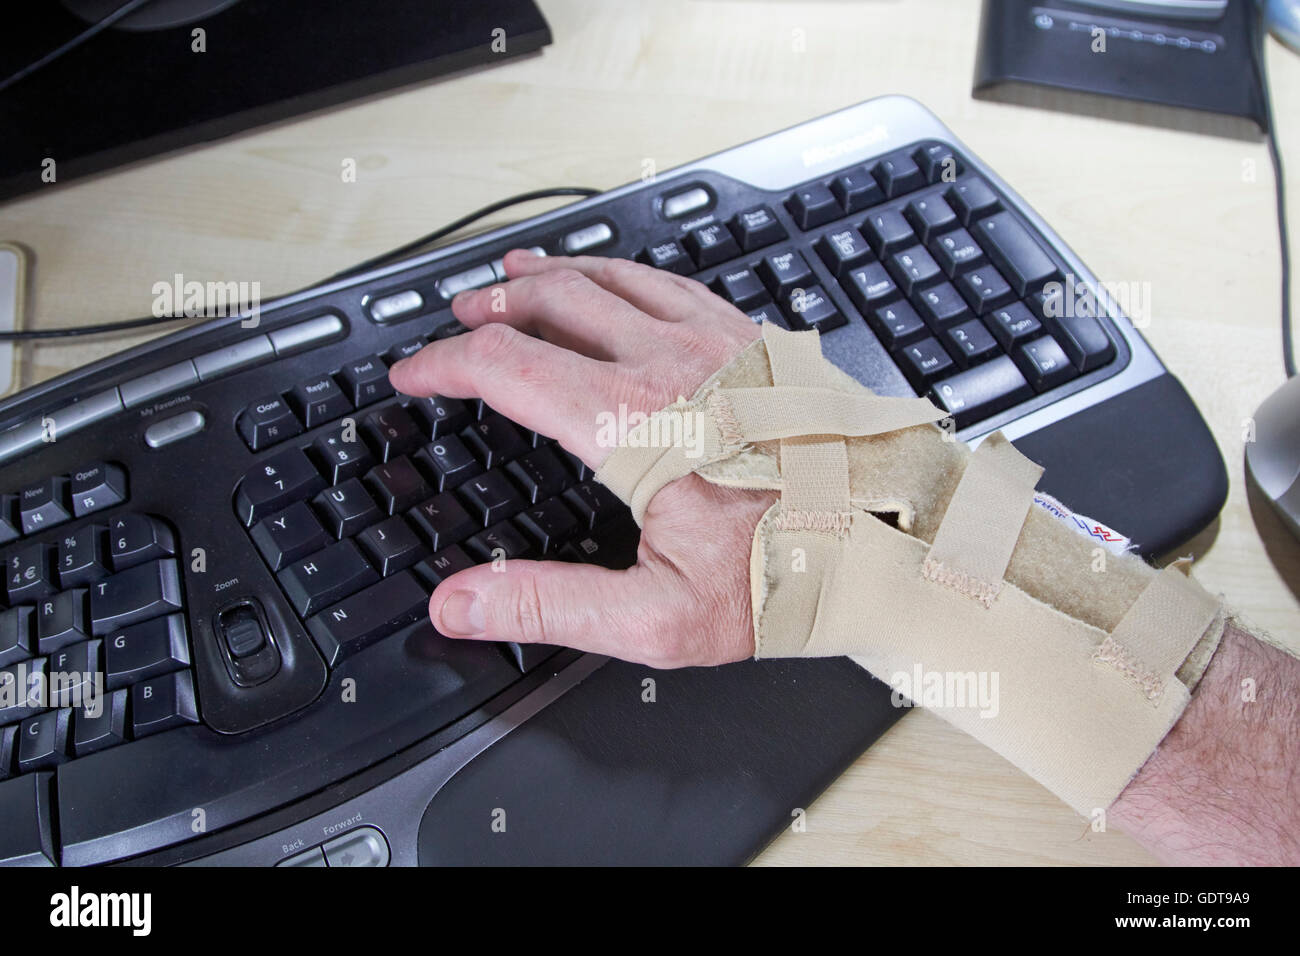 man wearing wrist split due to carpal tunnel syndrome using an ergonomic keyboard Stock Photo